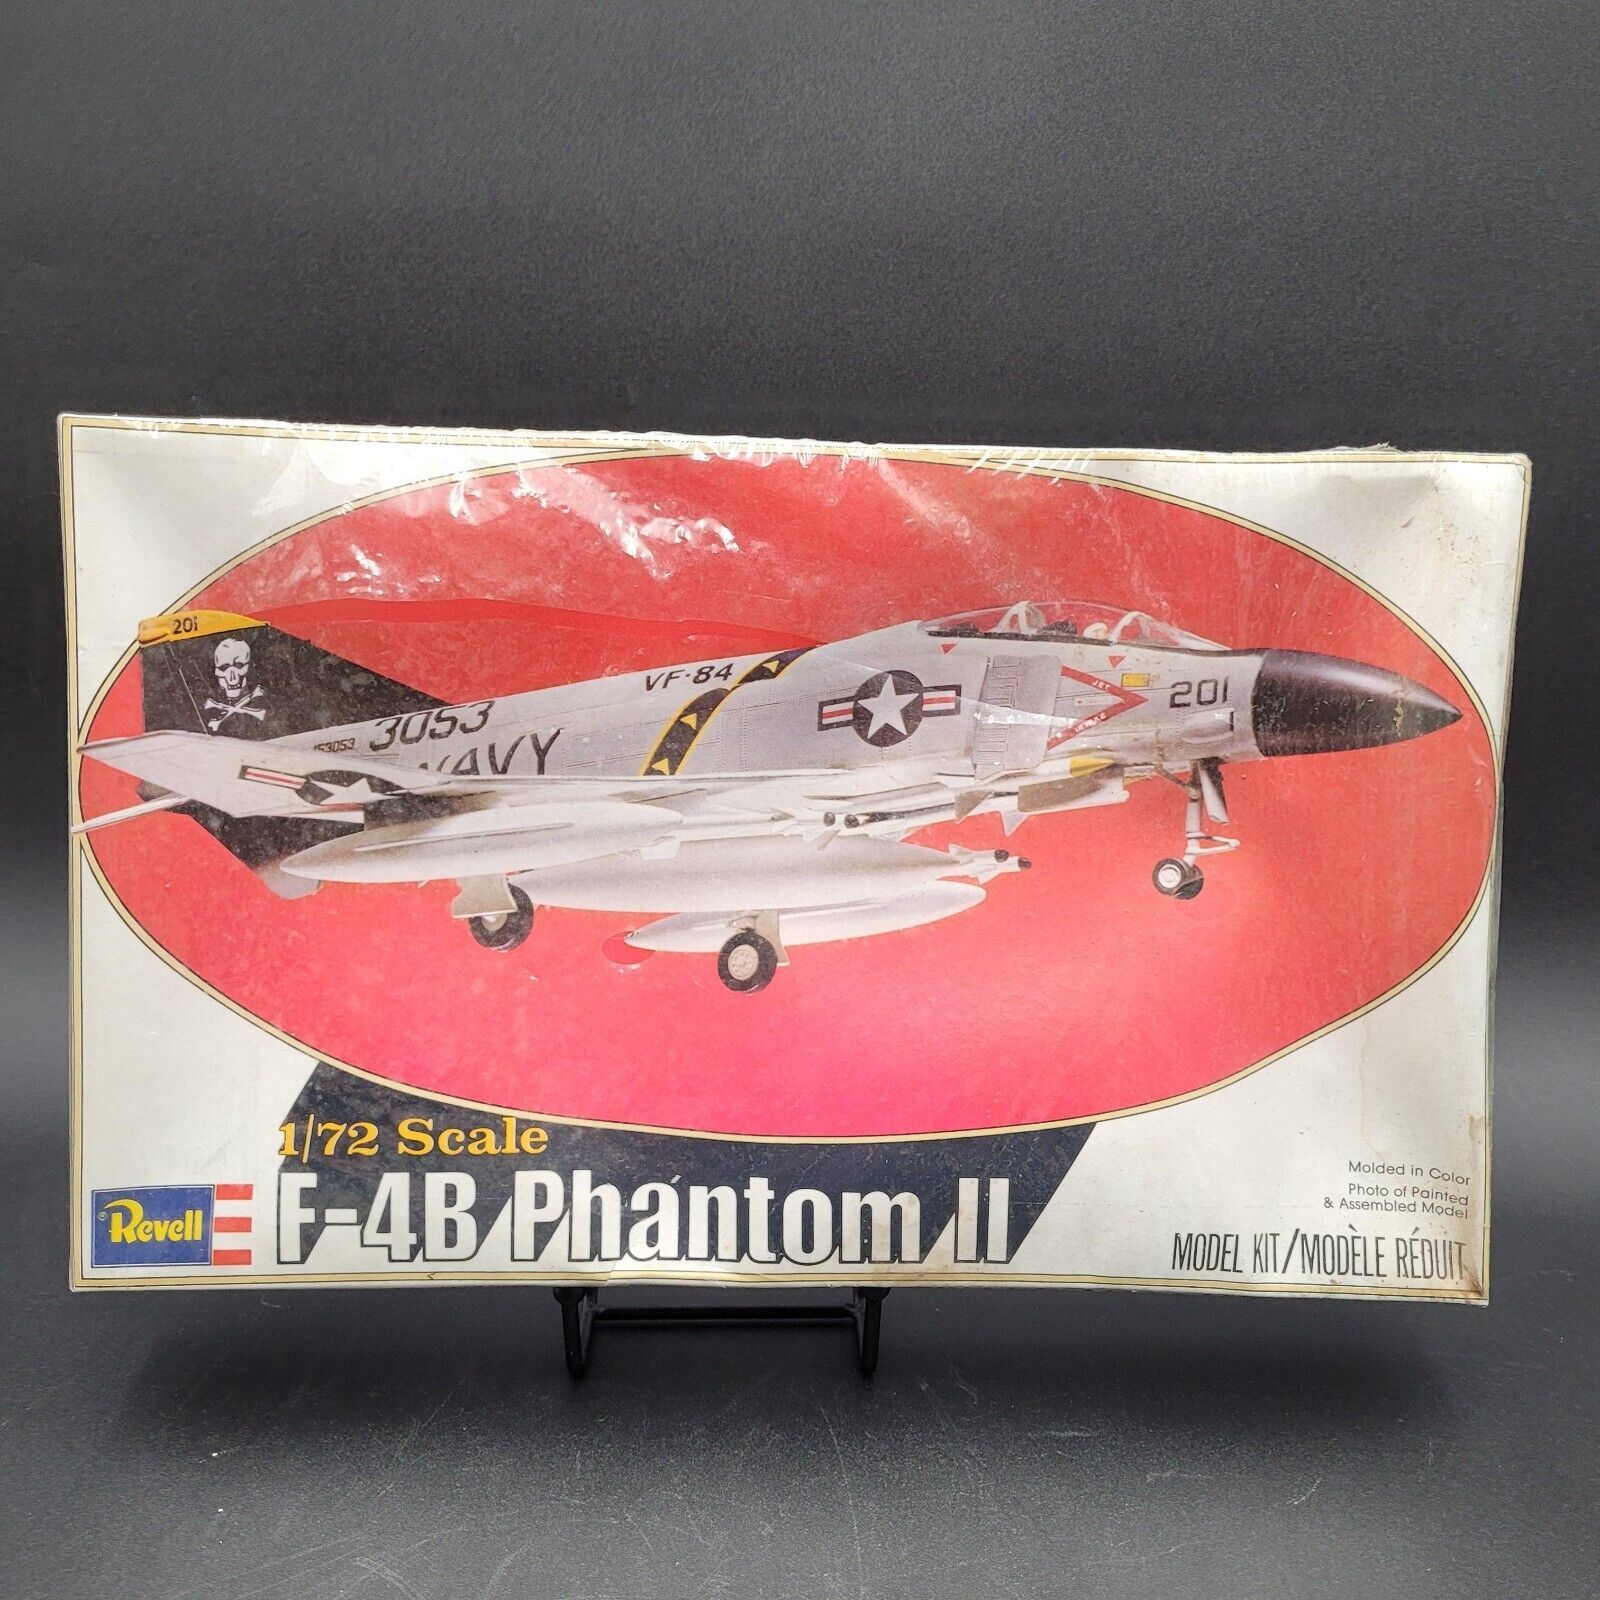 Primary image for Vintage 1979 Revell F-4B PHANTOM II Plastic Model Kit Mint Sealed Box MISB 1/72